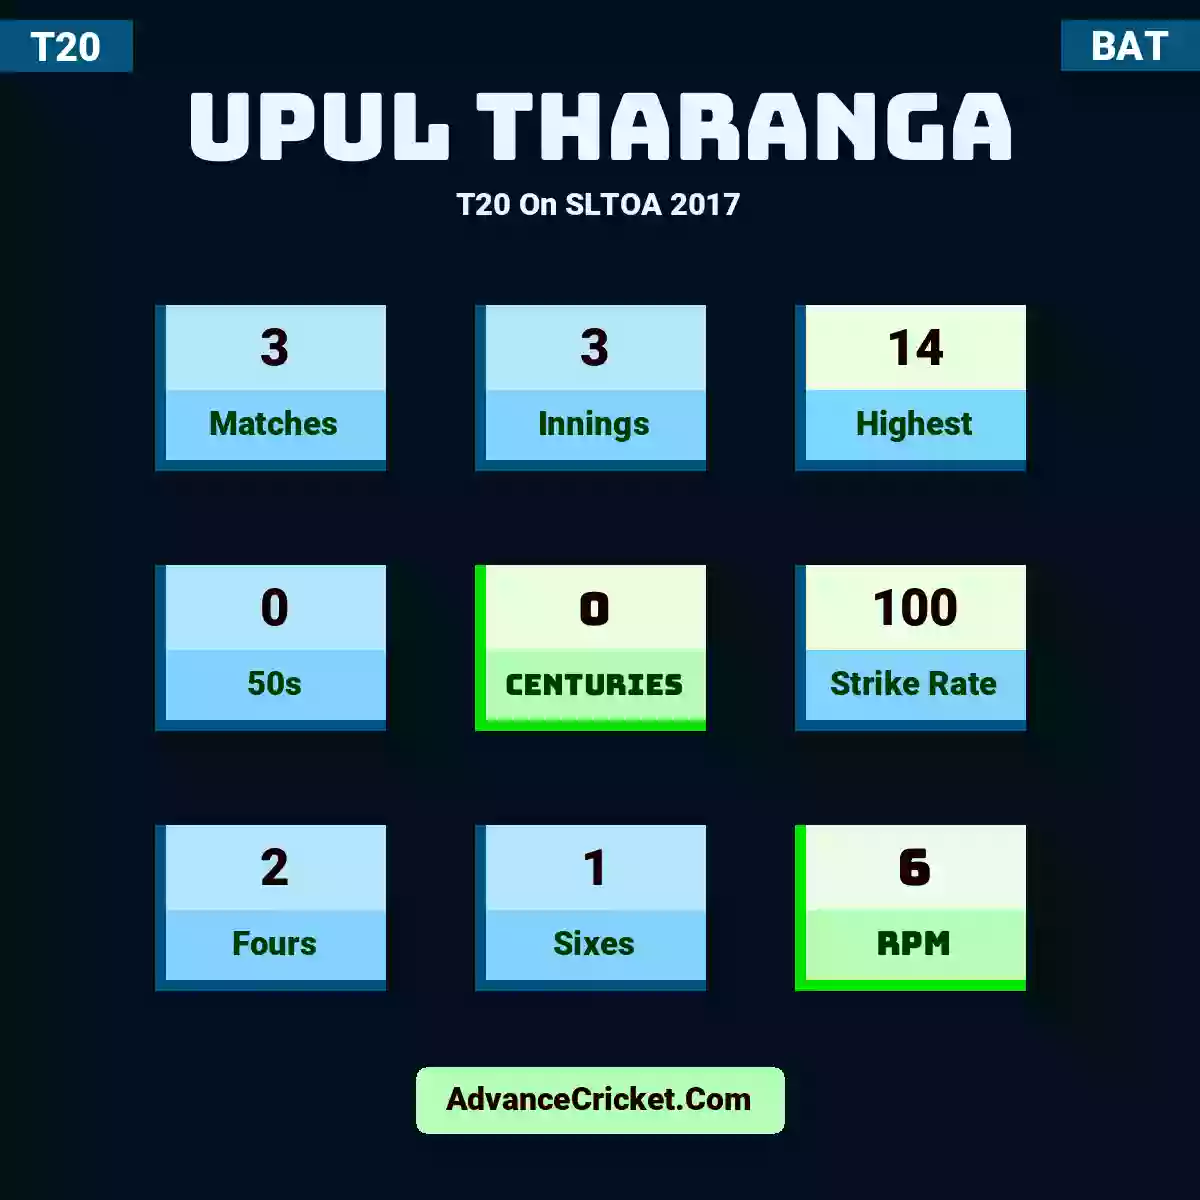 Upul Tharanga T20  On SLTOA 2017, Upul Tharanga played 3 matches, scored 14 runs as highest, 0 half-centuries, and 0 centuries, with a strike rate of 100. U.Tharanga hit 2 fours and 1 sixes, with an RPM of 6.